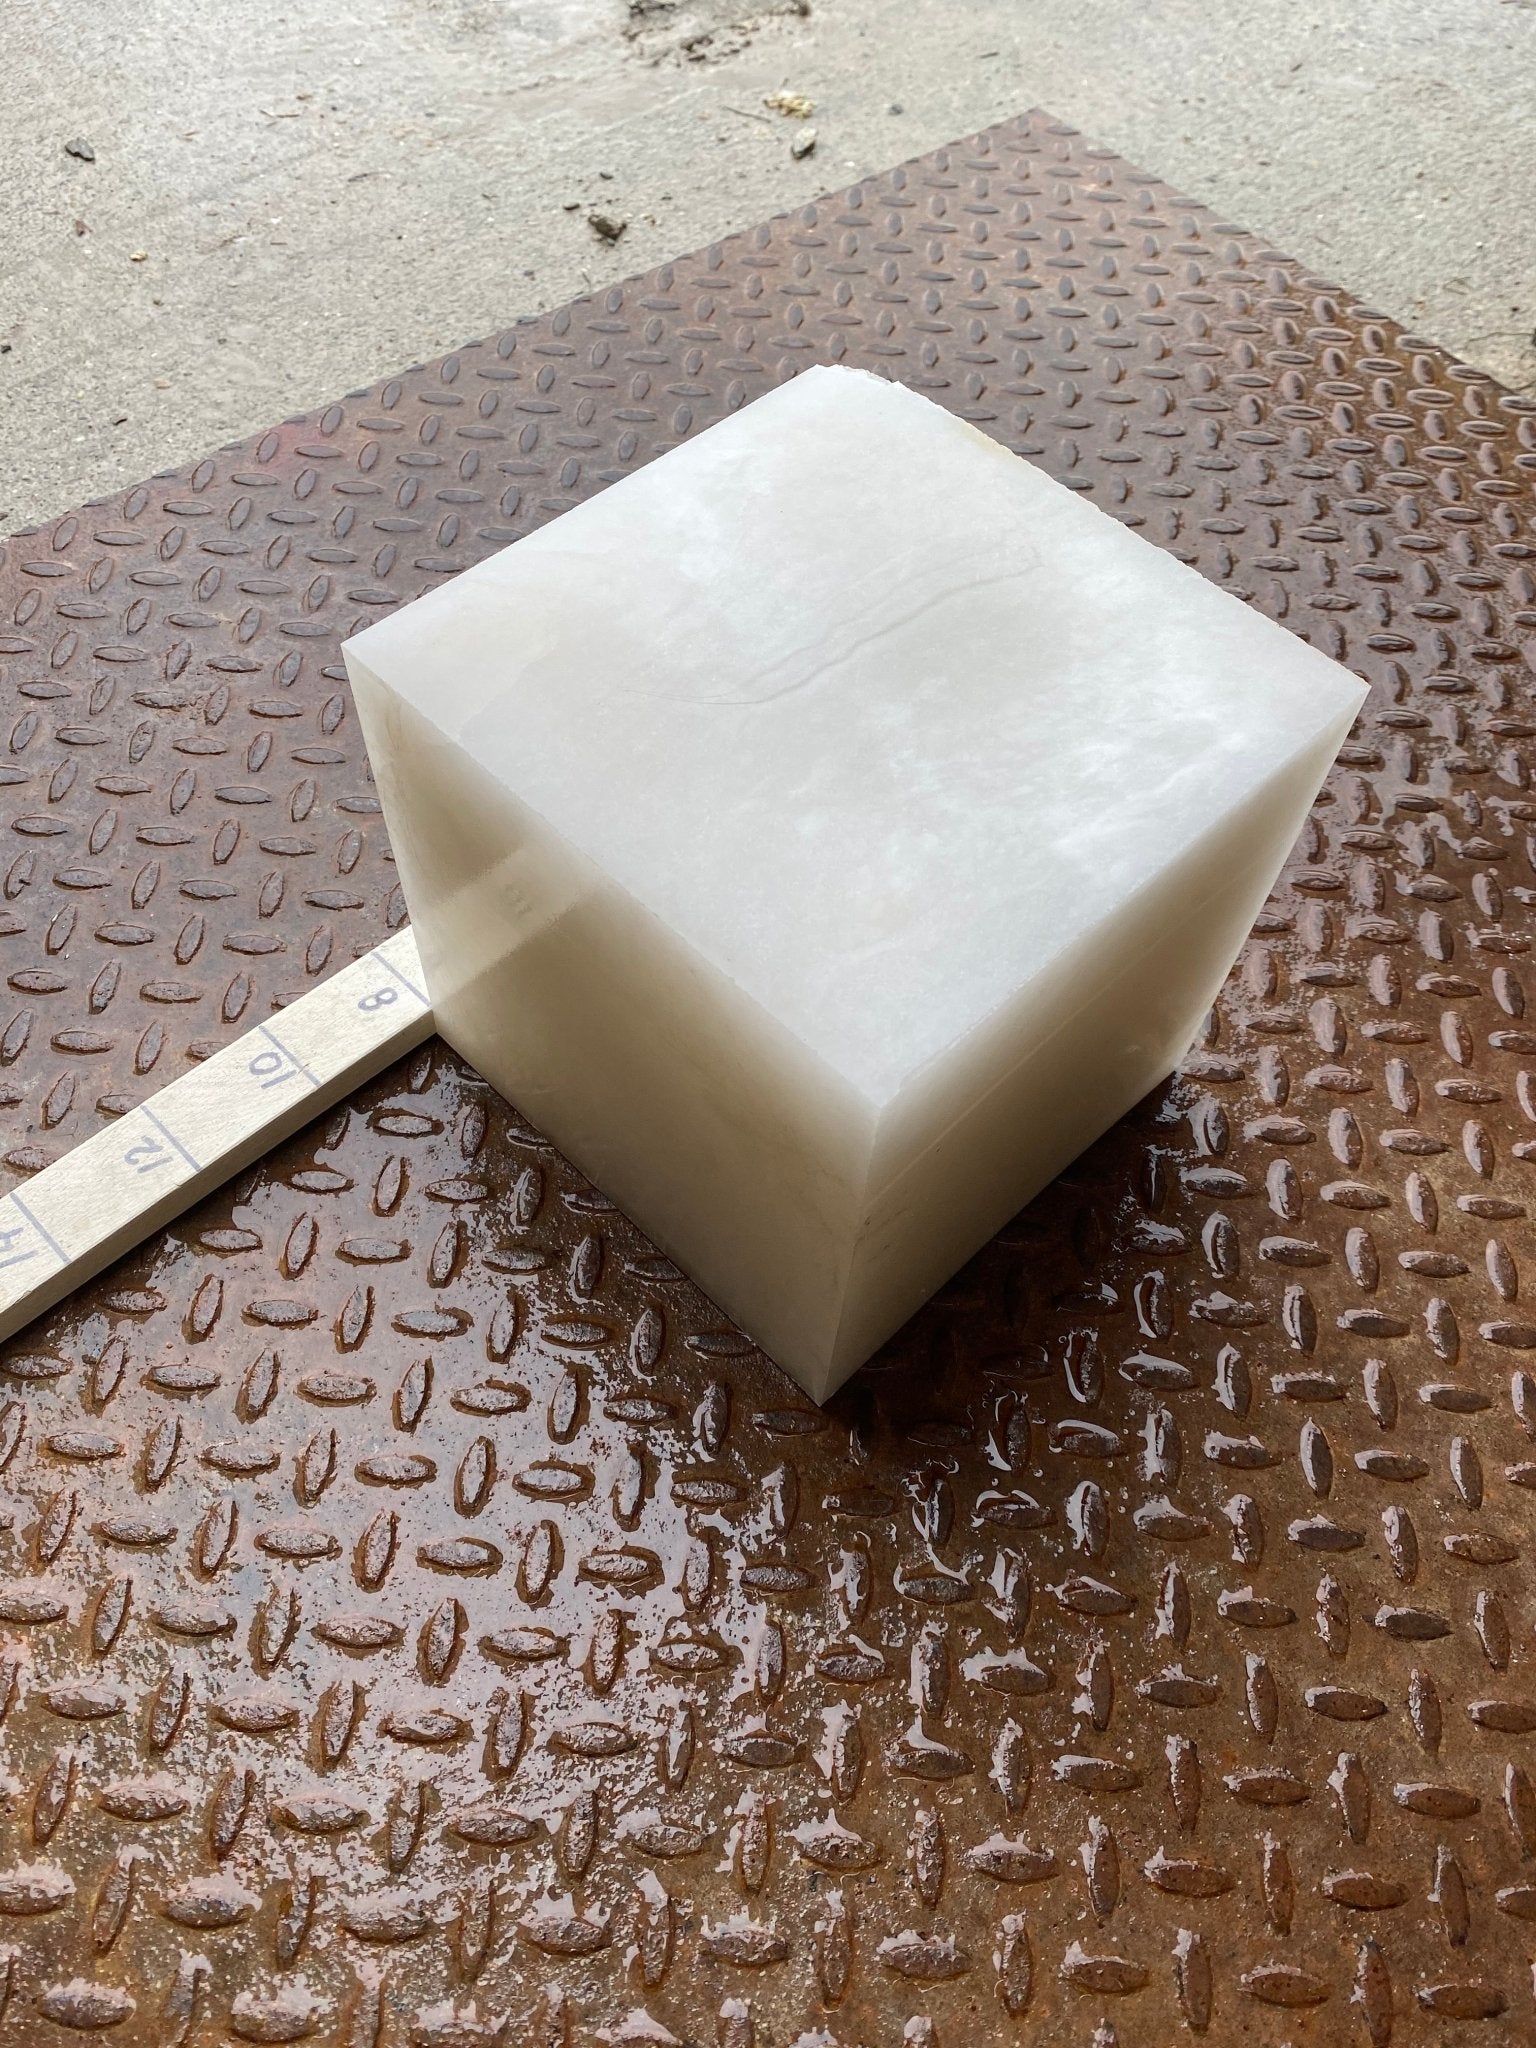 Translucent White Spanish Alabaster 45LBS 8x8x8 Block - Gian Carlo Artistic Stone